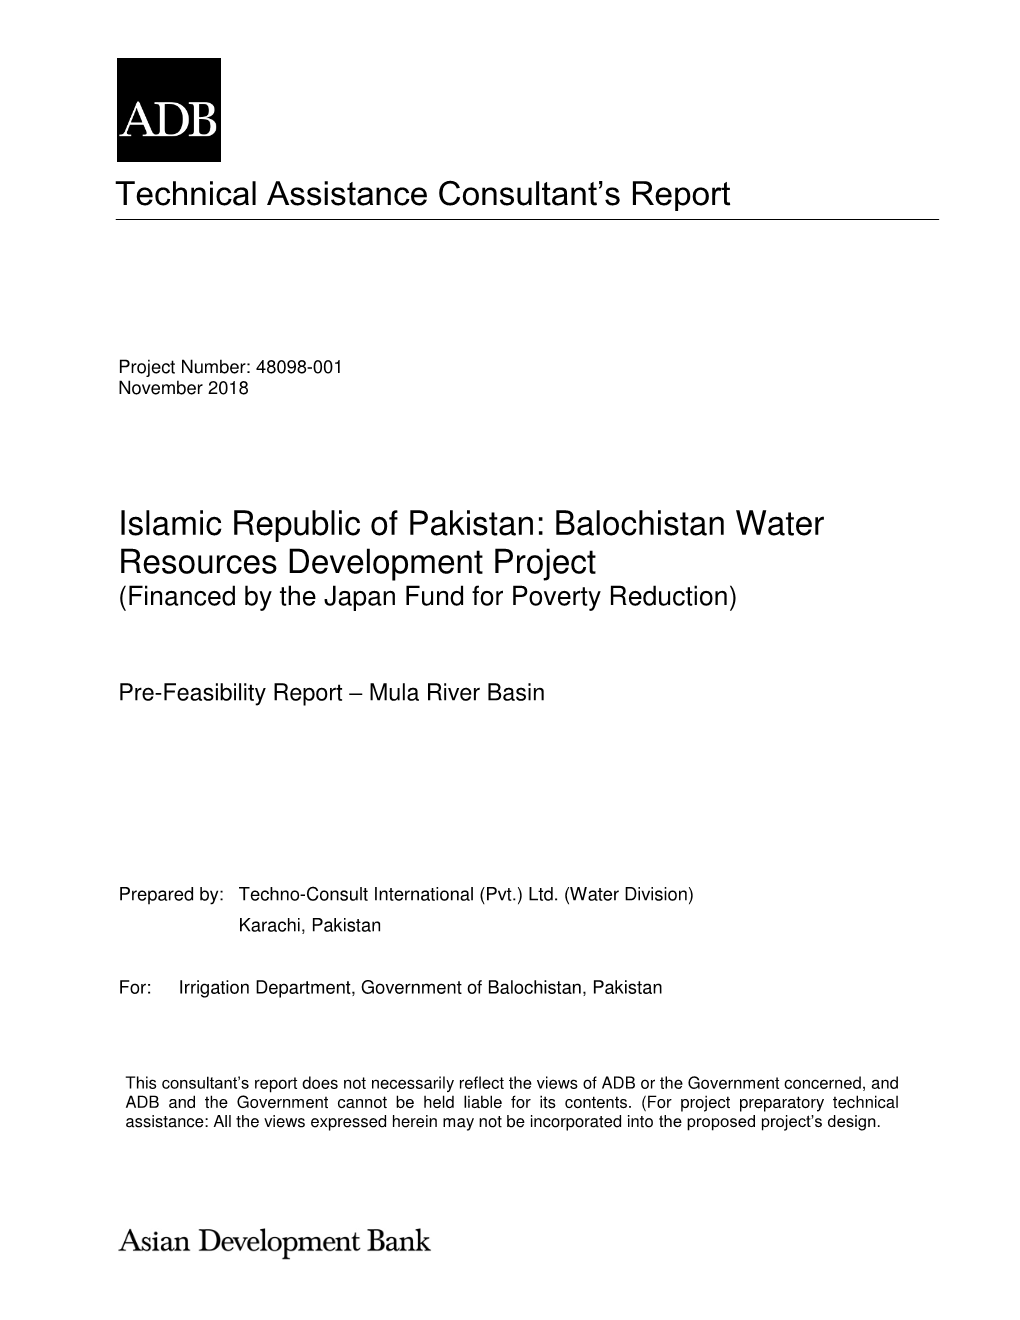 Balochistan Water Resources Development Project – Mula River